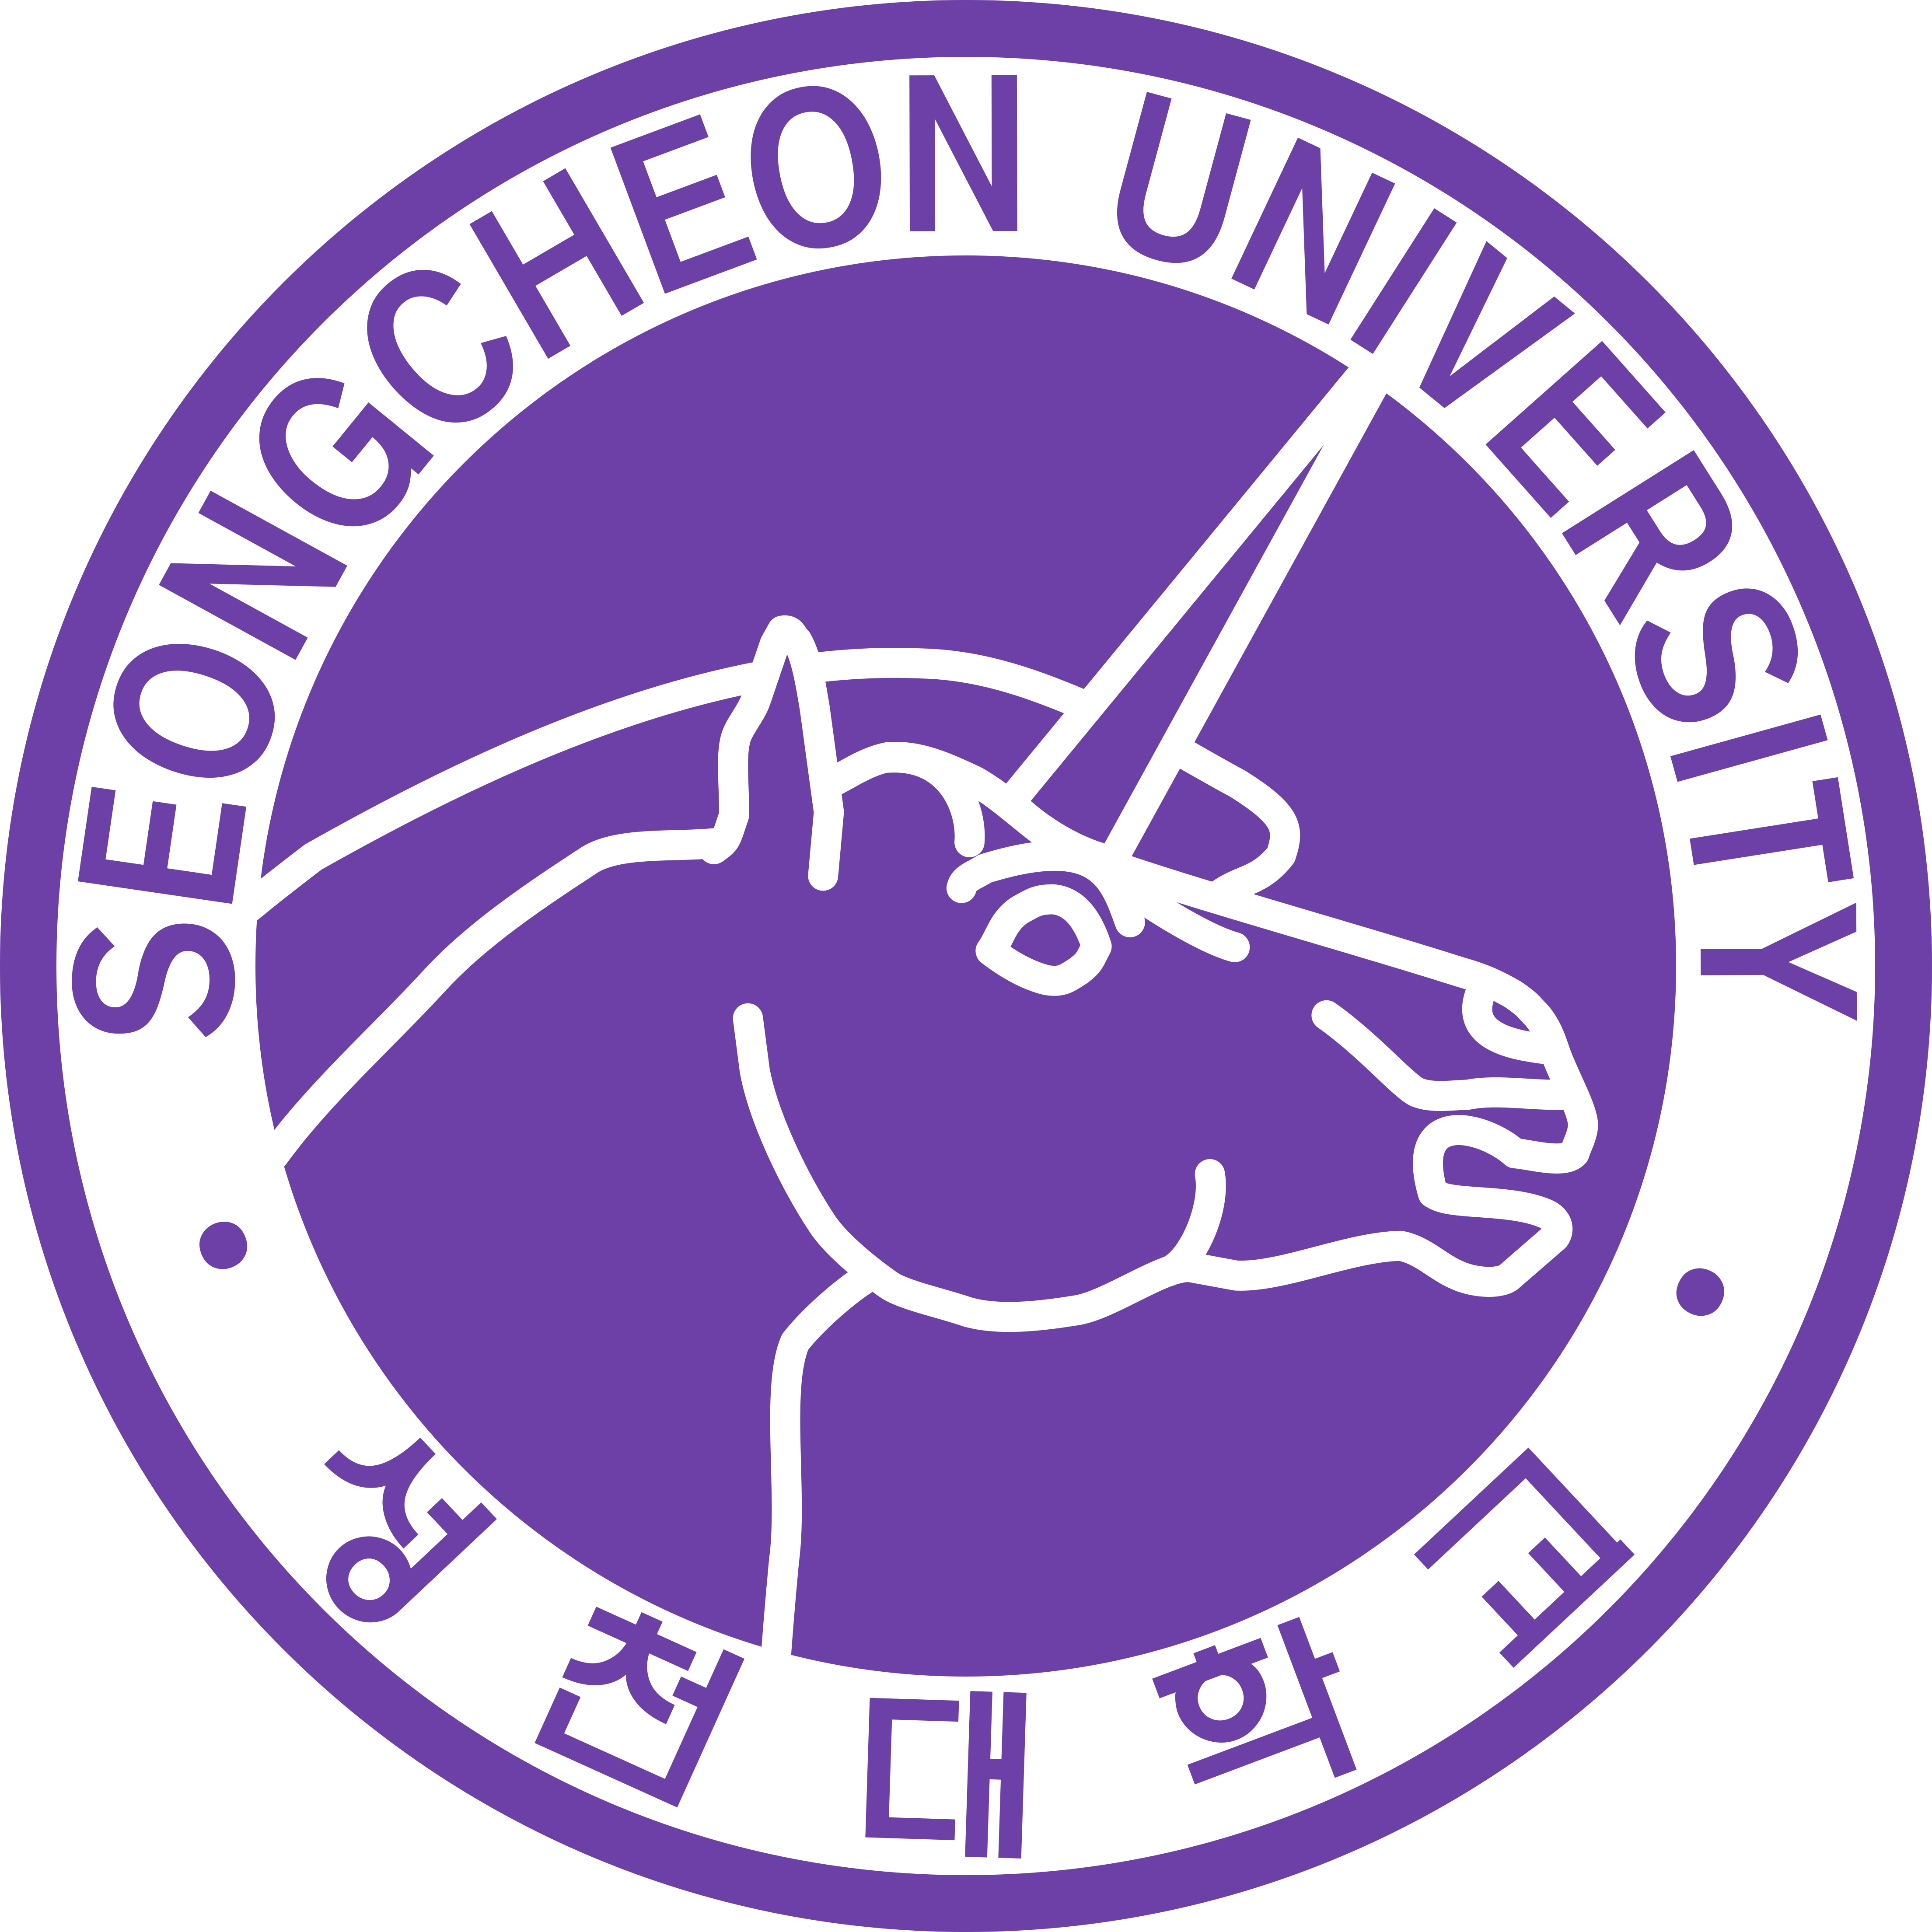 Seongcheonunivlogo.svg